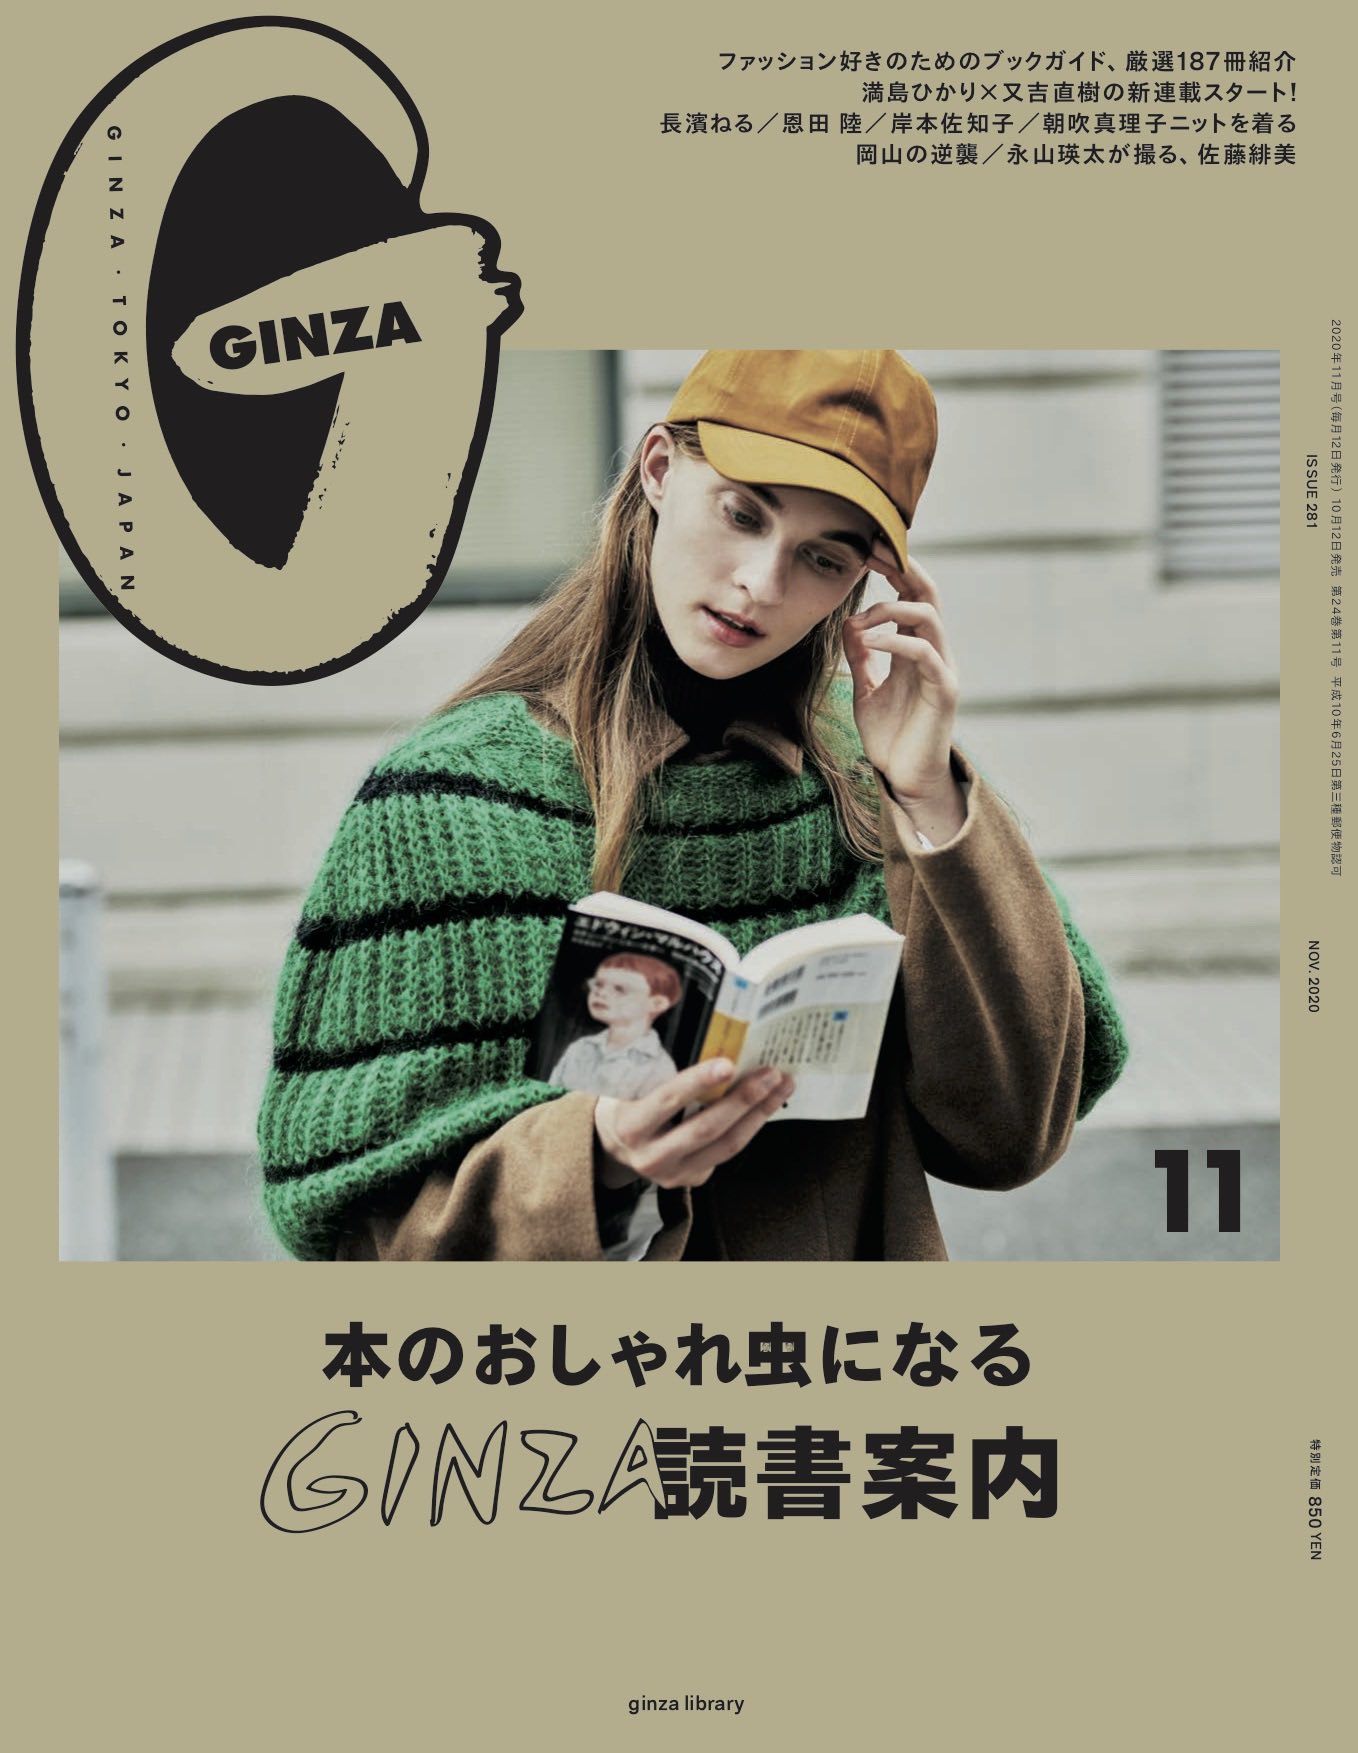 GINZA on X: "GINZA月号は月日発売。本のおしゃれ虫になる